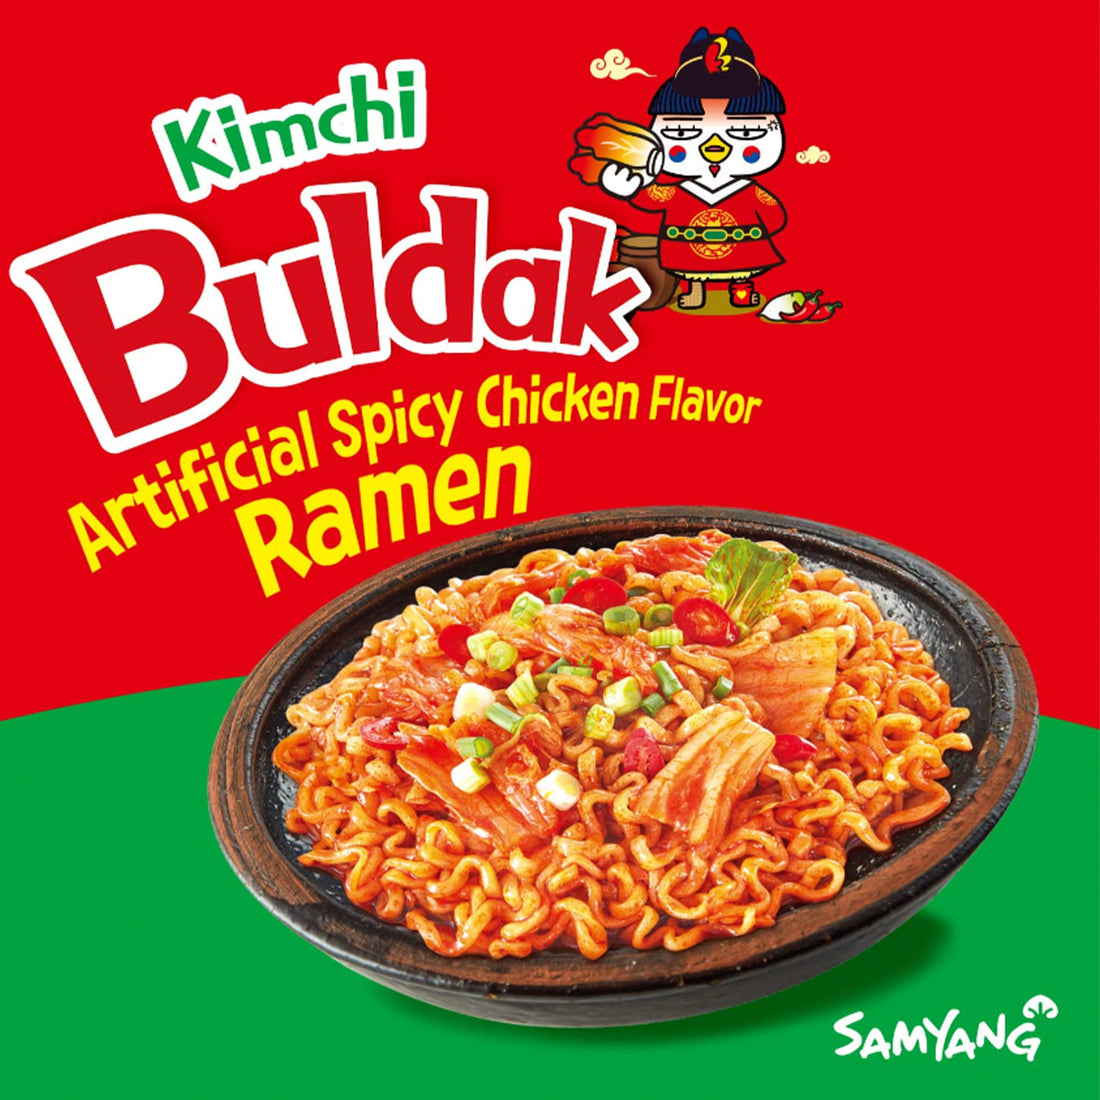 1. Buldak Artificial Spicy Chicken Flavor Ramen Regular Spicy 5